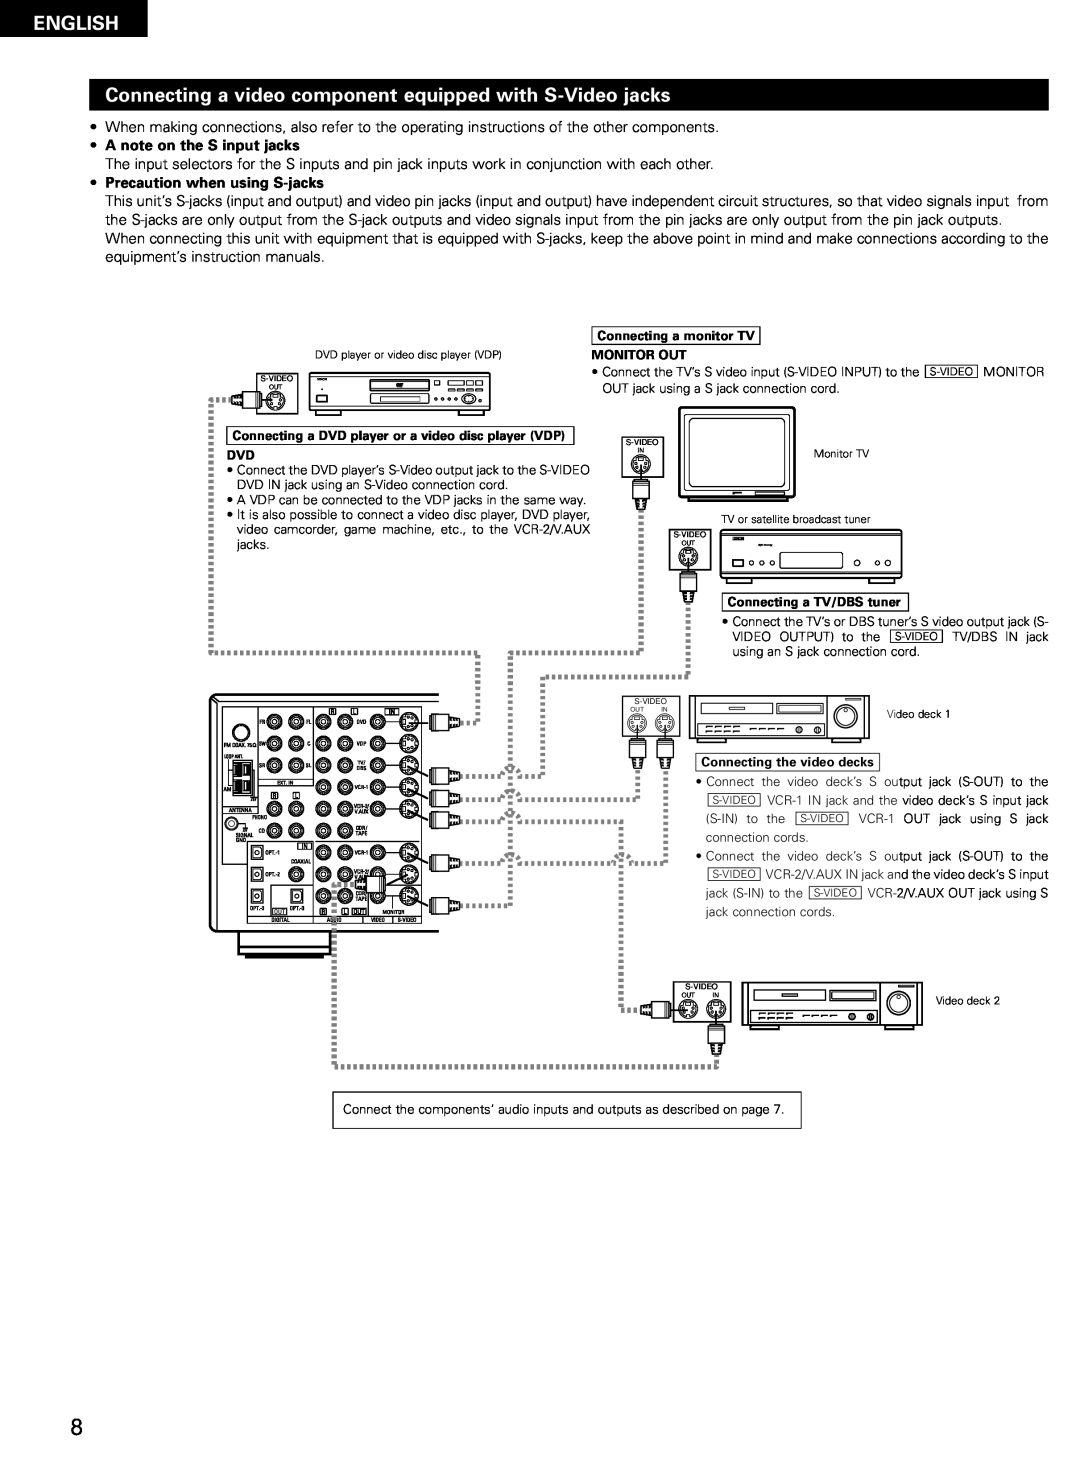 Denon AVR-2802/982 operating instructions English, A note on the S input jacks, Precaution when using S-jacks 